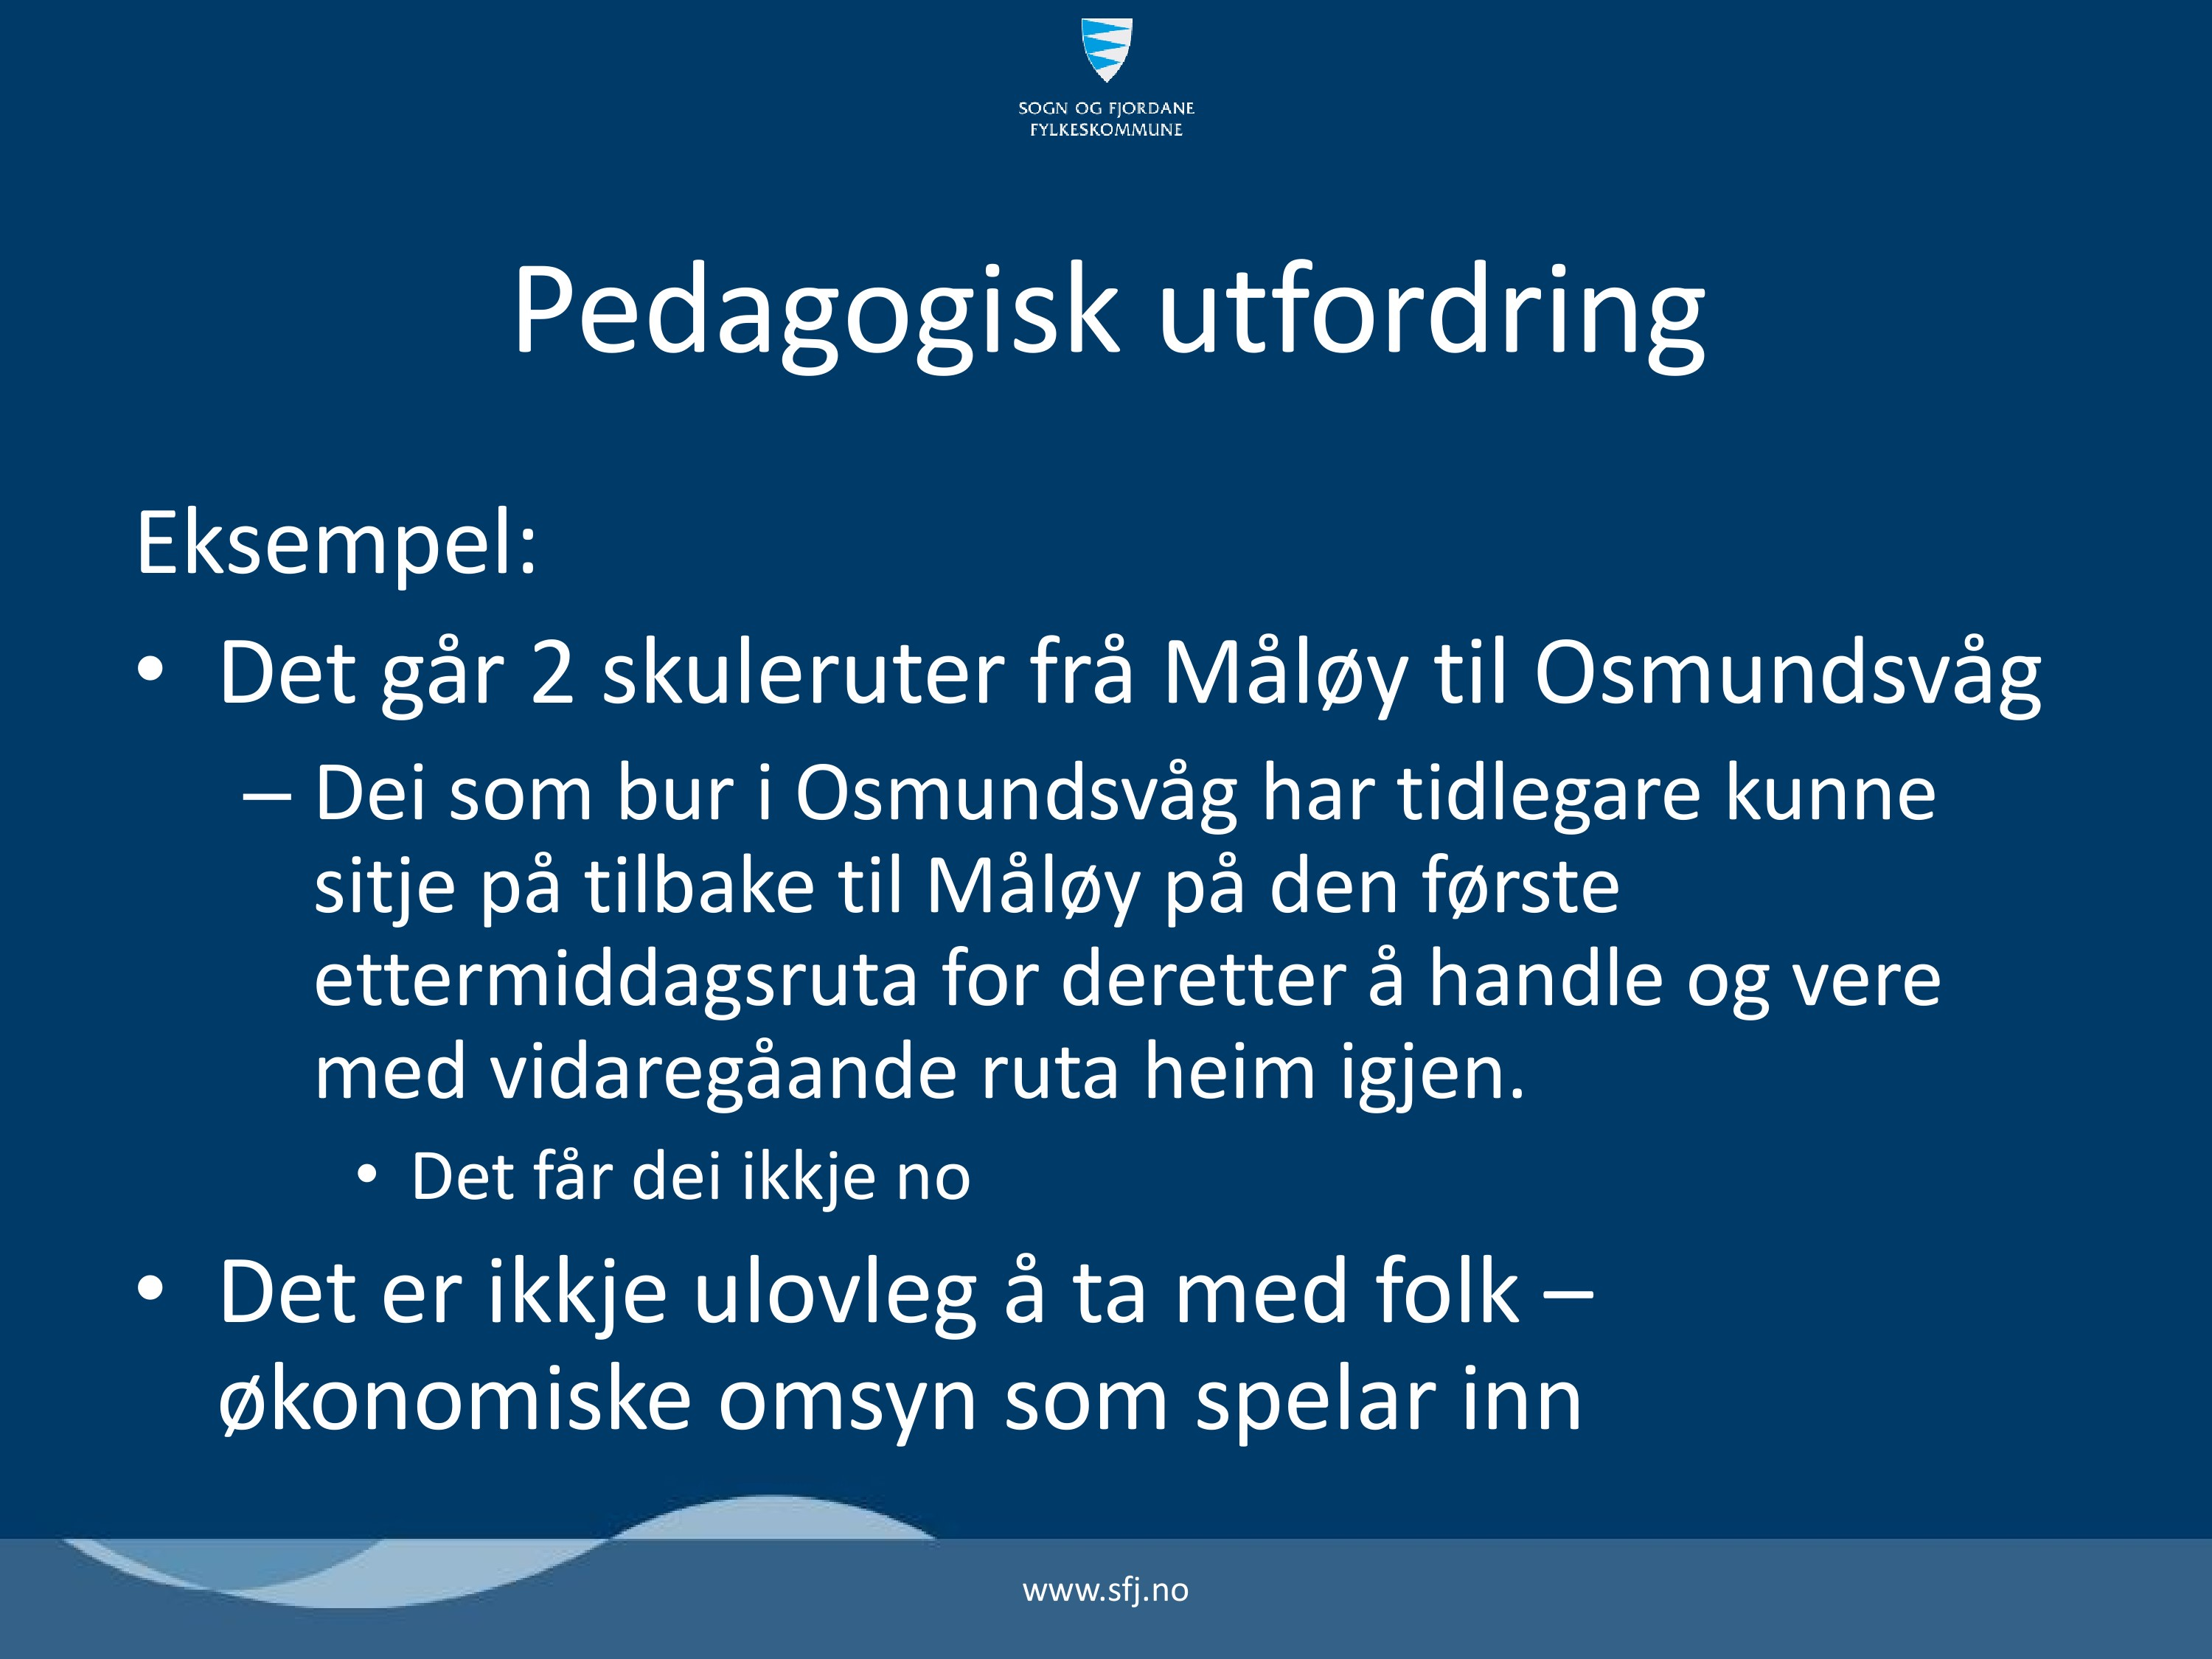 Pedagogisk utfordring Eksempel: Det går 2 skuleruter frå Måløy til Osmundsvåg Dei som bur i Osmundsvåg har tidlegare kunne sitje på tilbake til Måløy på den første